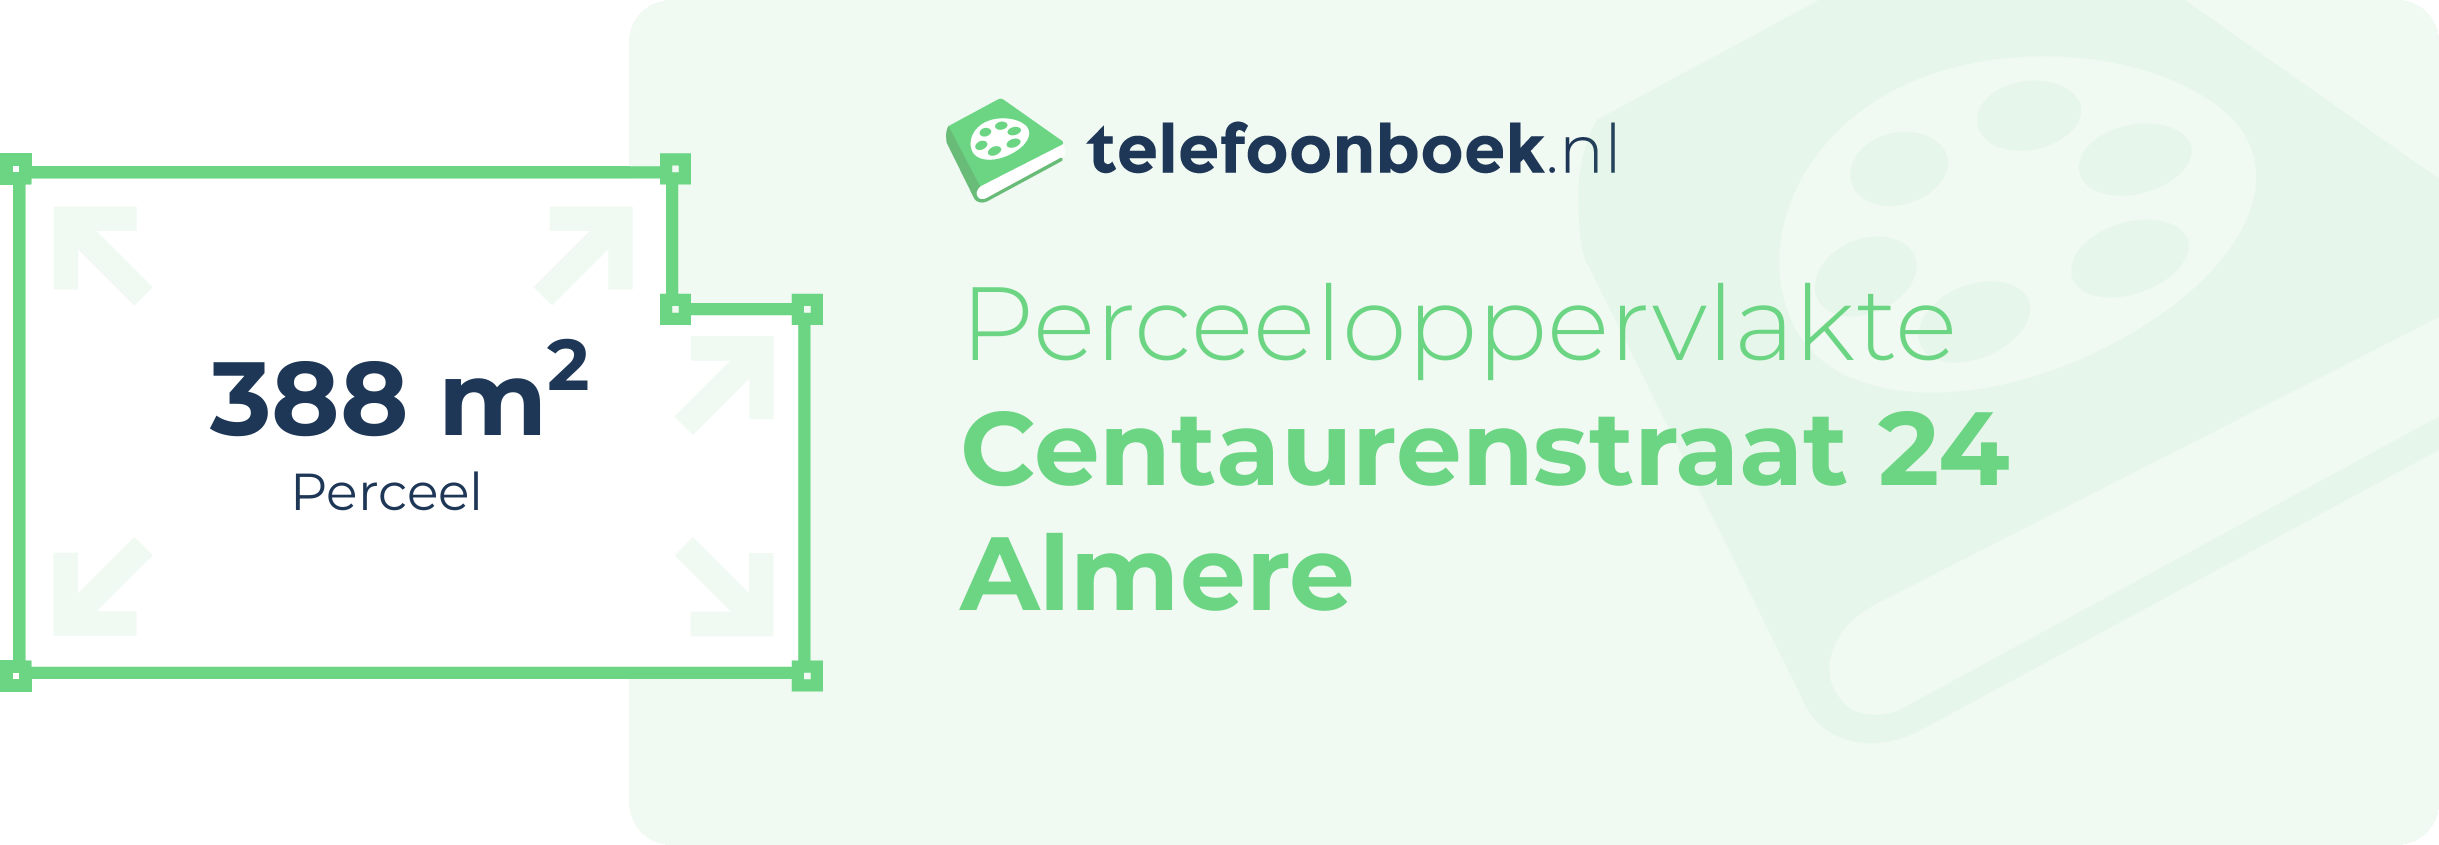 Perceeloppervlakte Centaurenstraat 24 Almere